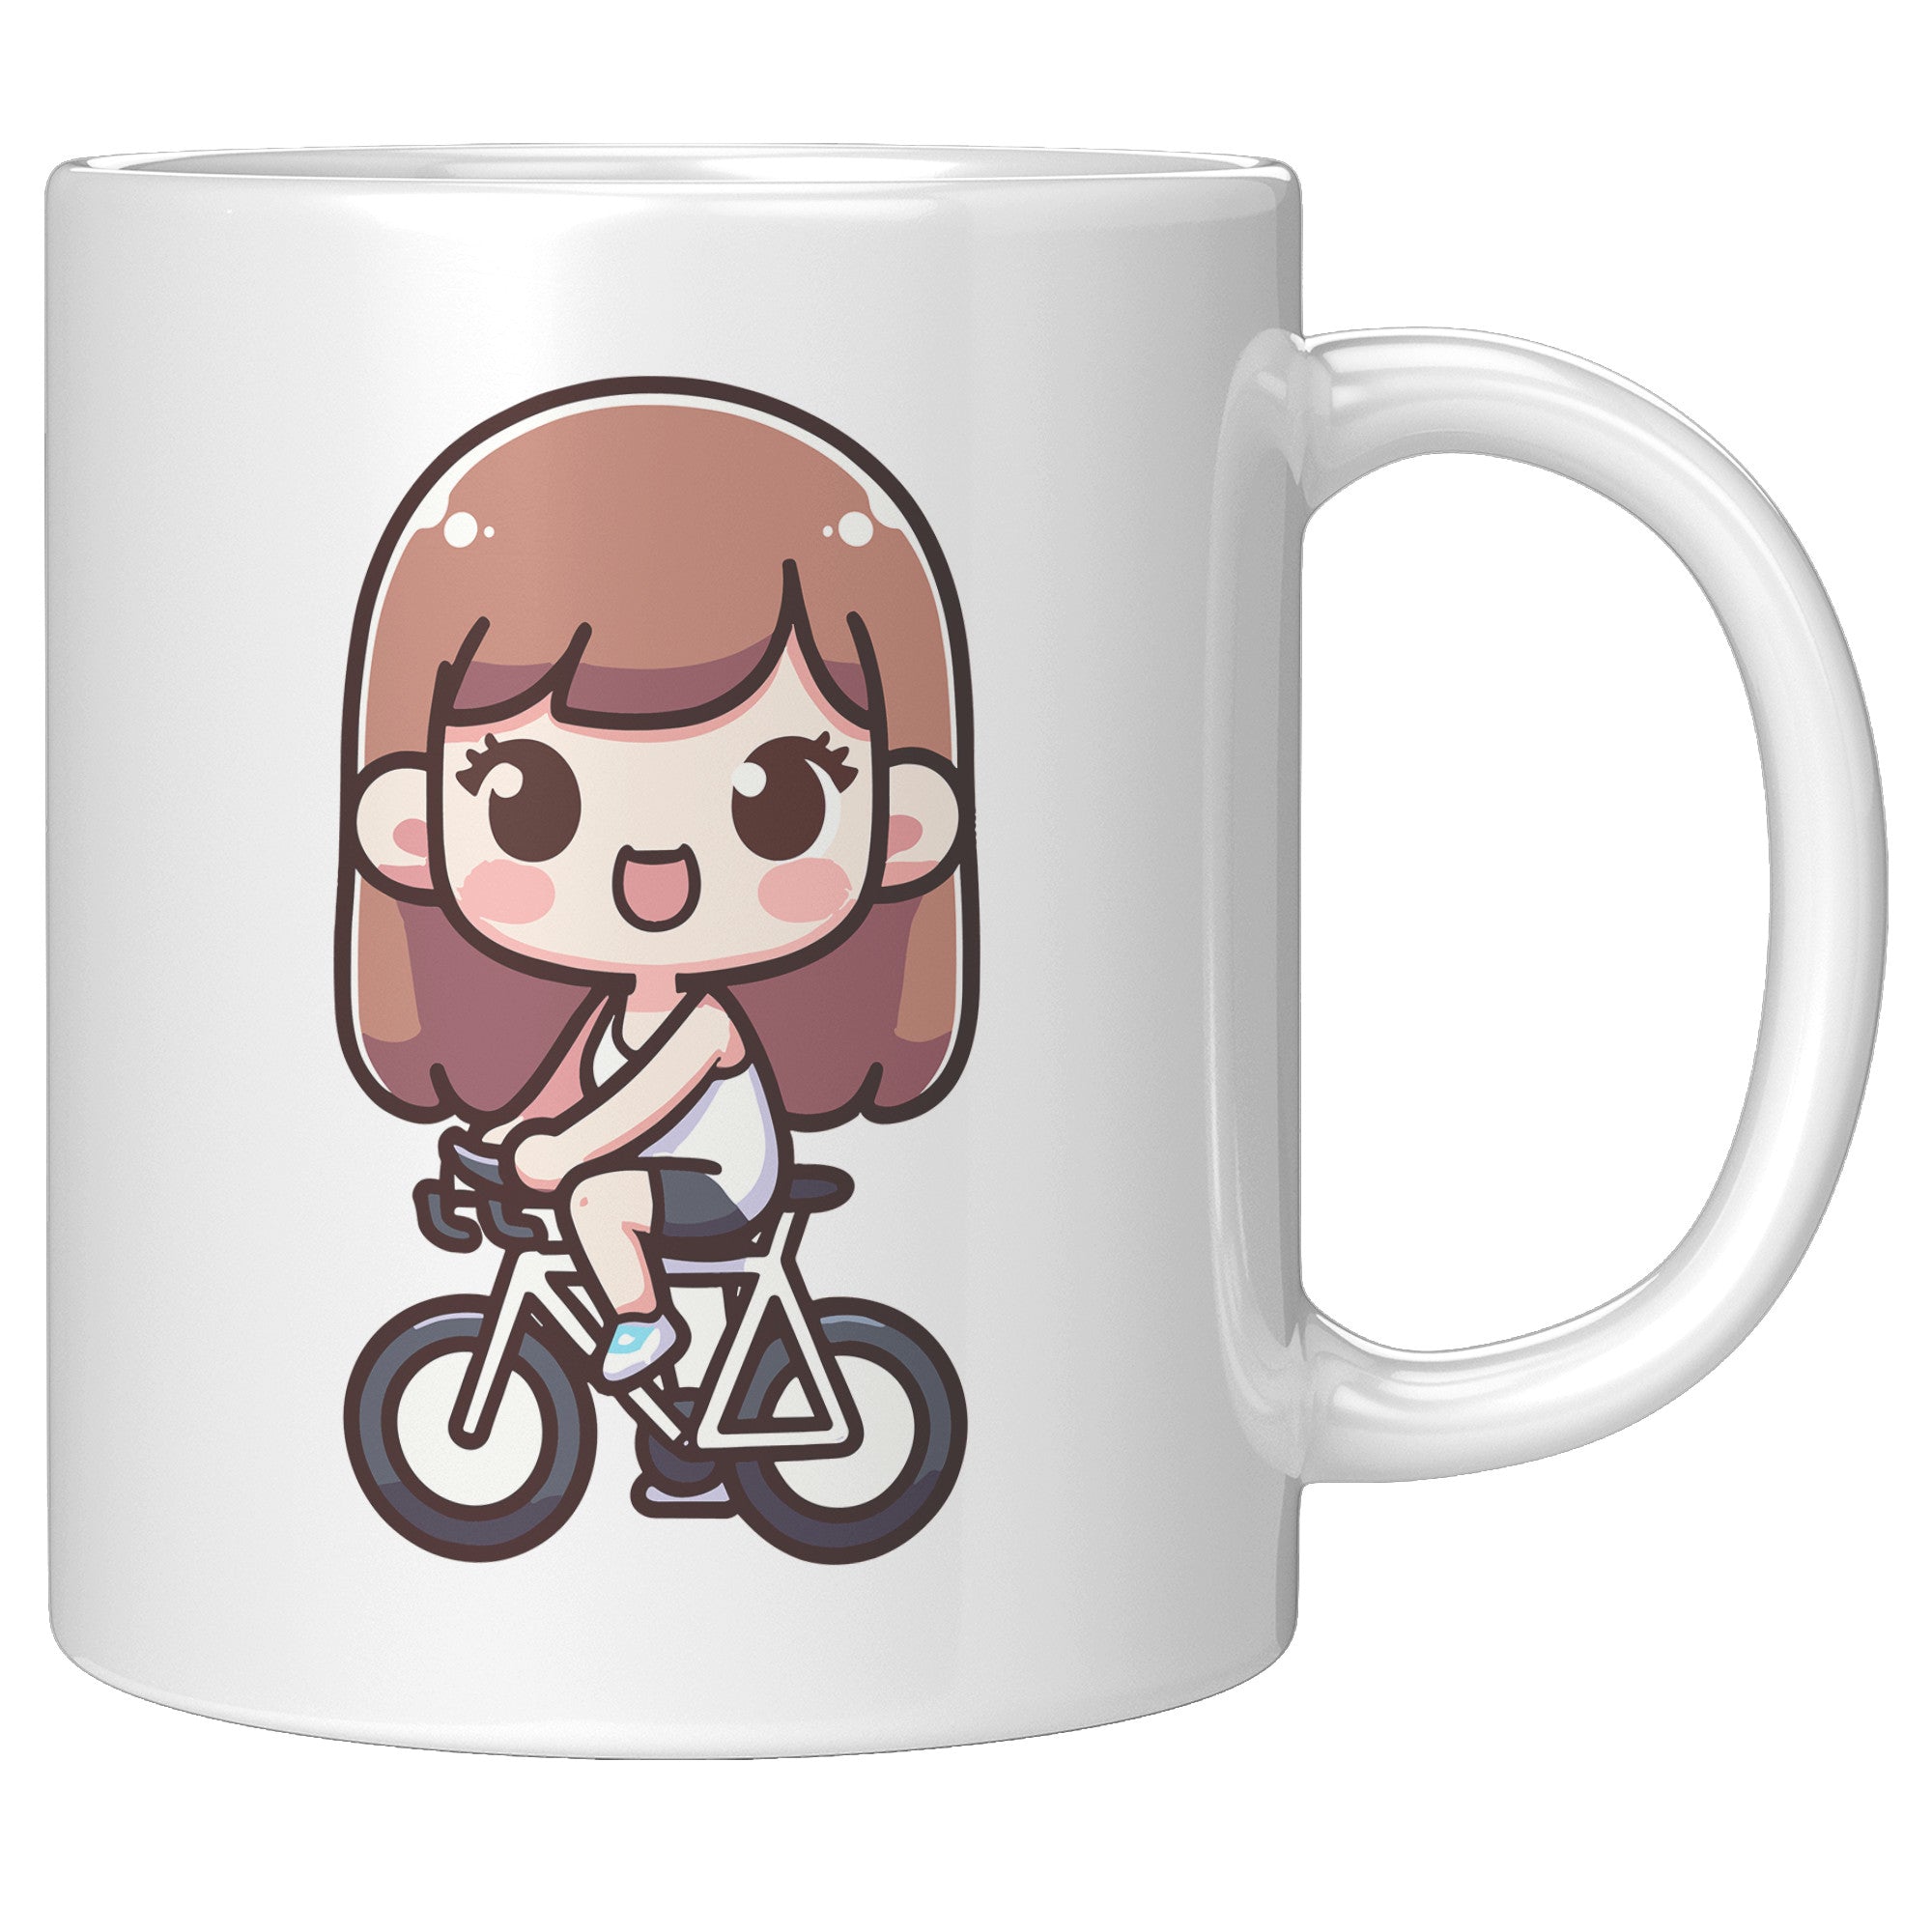 "Funko Pop Triathlon Athlete Coffee Mug - Multisport Morning Brew Cup - Ideal Gift for Triathletes - Swim, Bike, Run Inspired Mug" - K